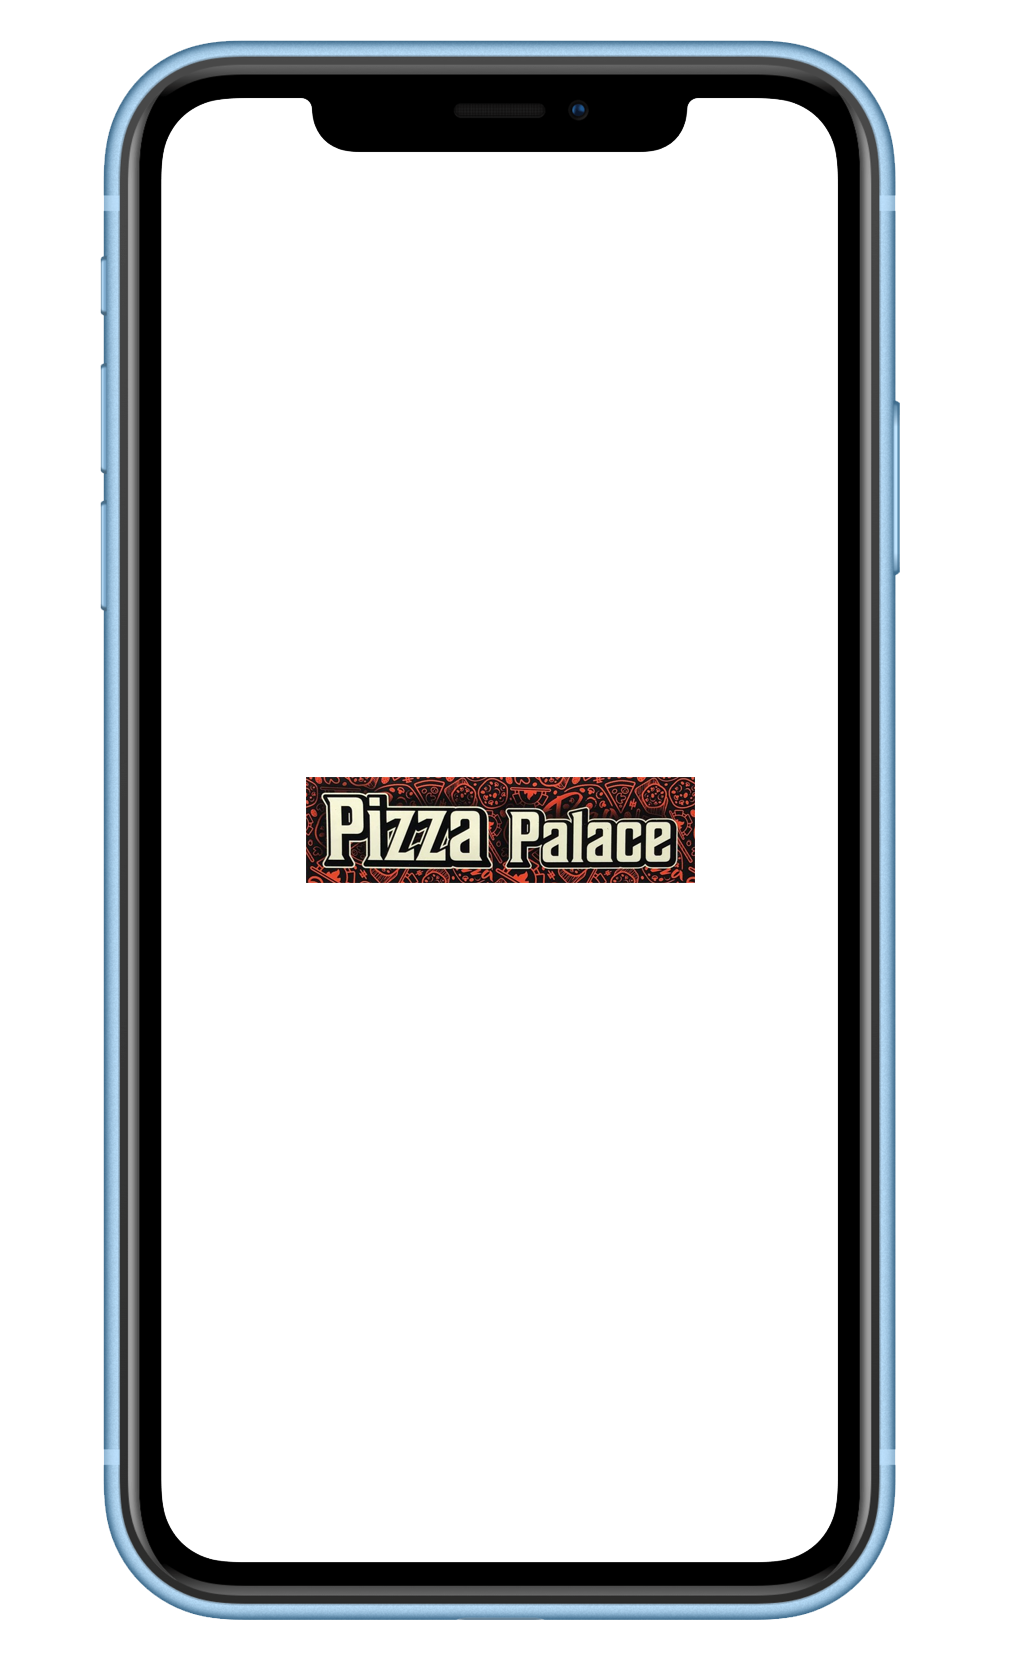 Pizza Palace on alphaEats